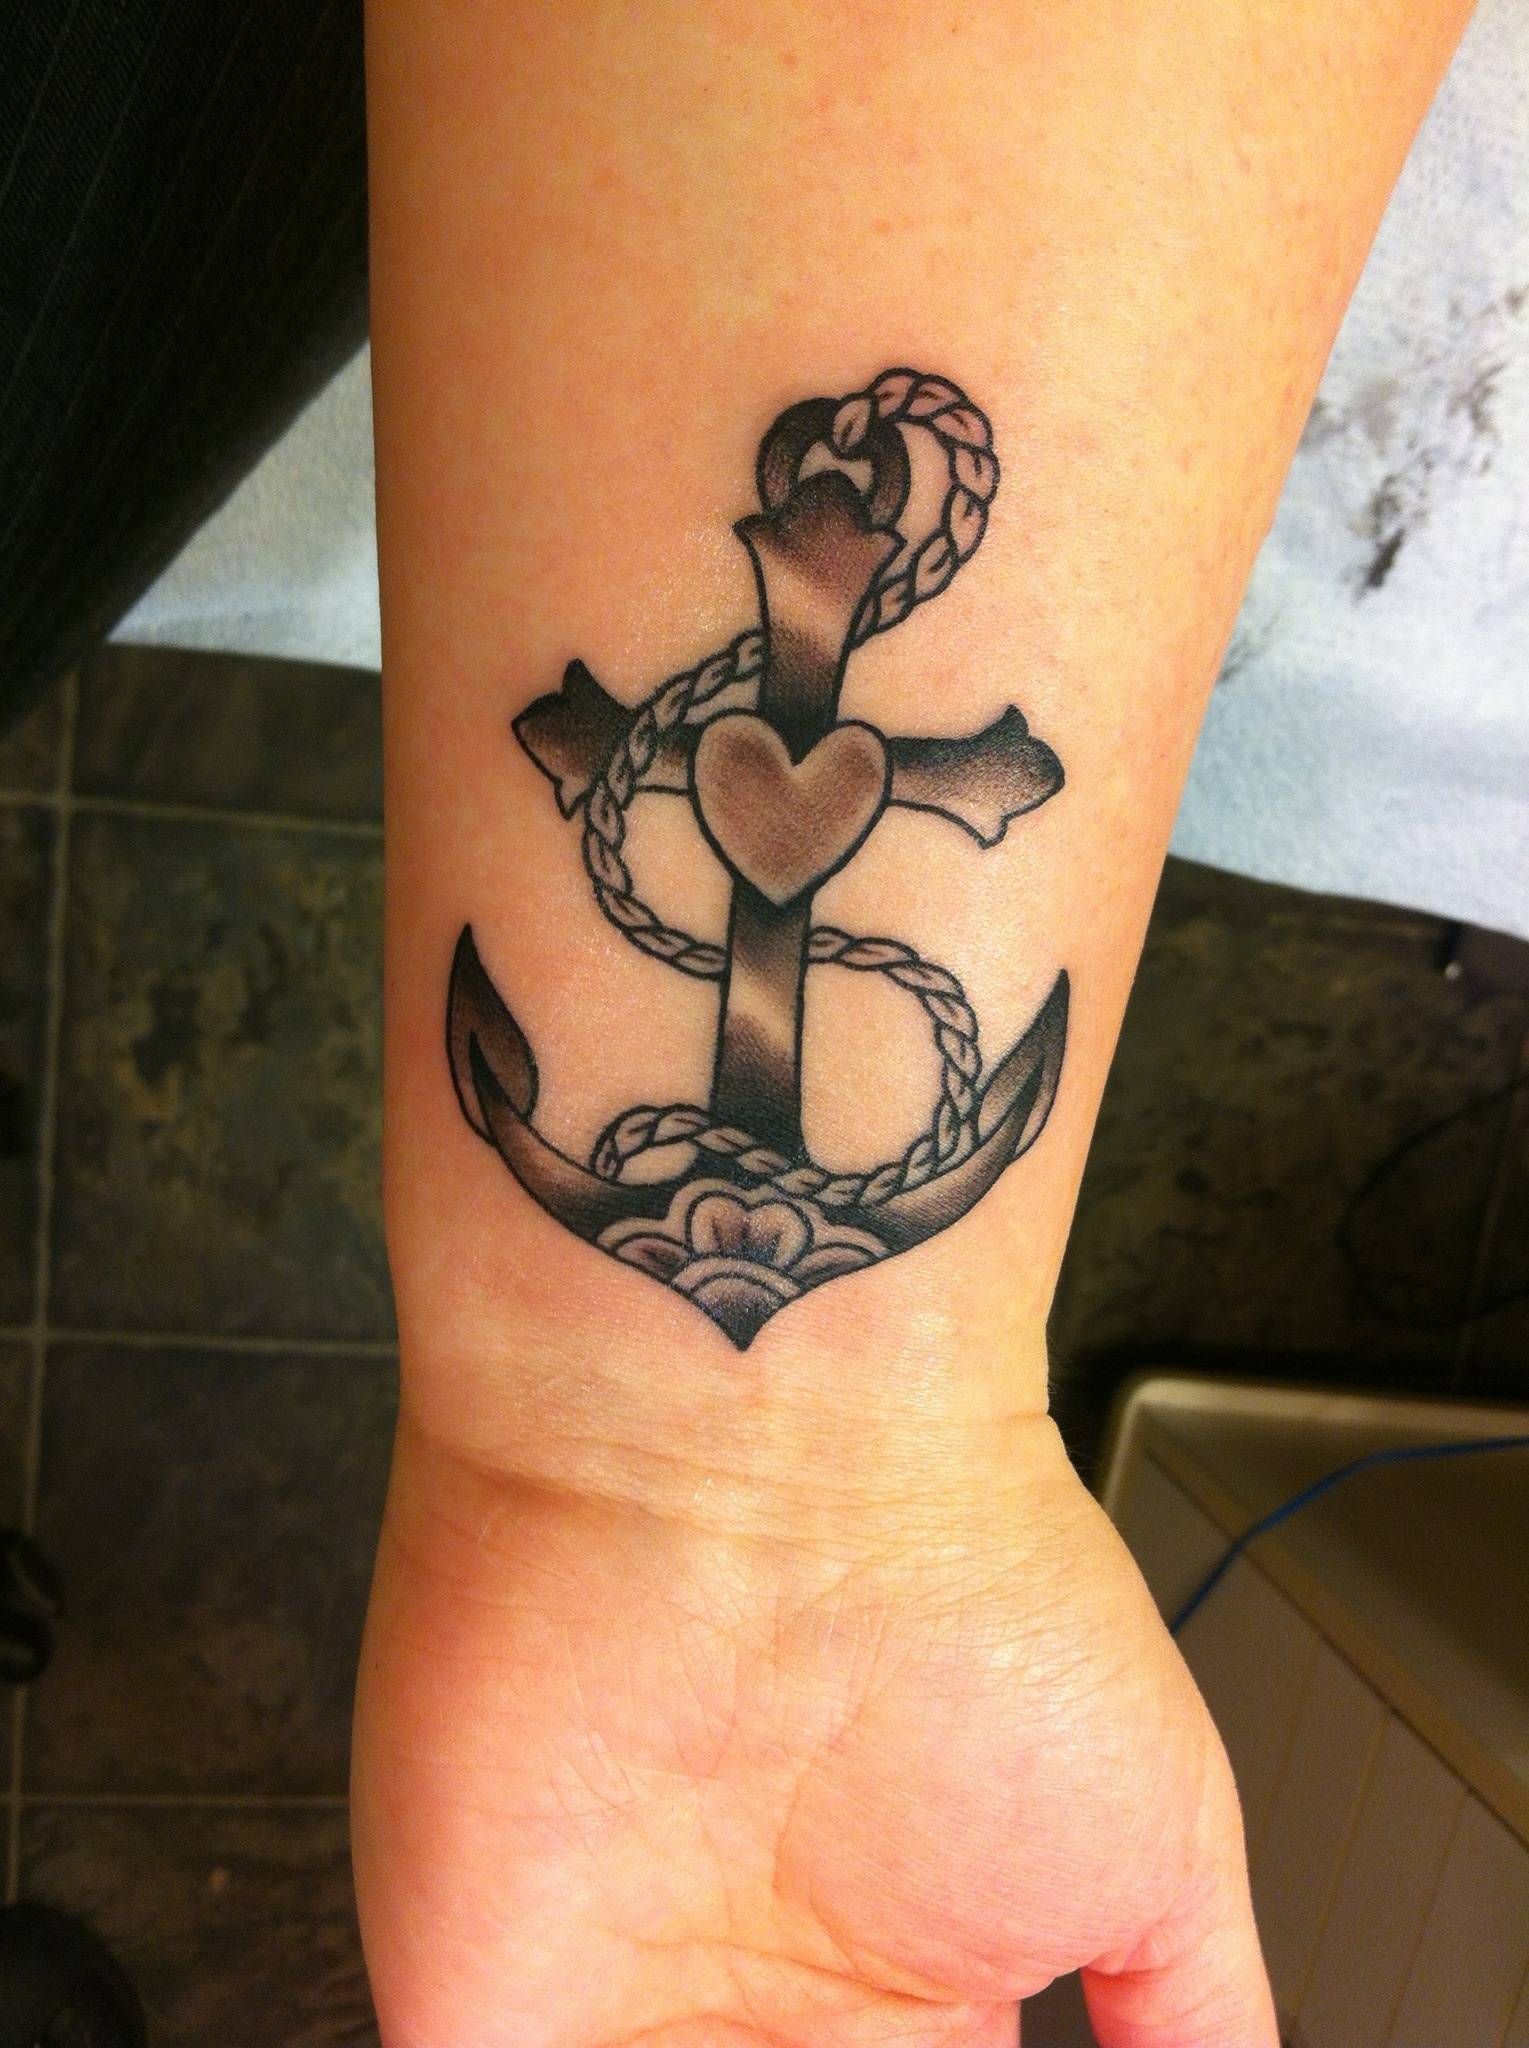 Second tattoo. Chris @Soul Survivors -   23 cross anchor tattoo
 ideas